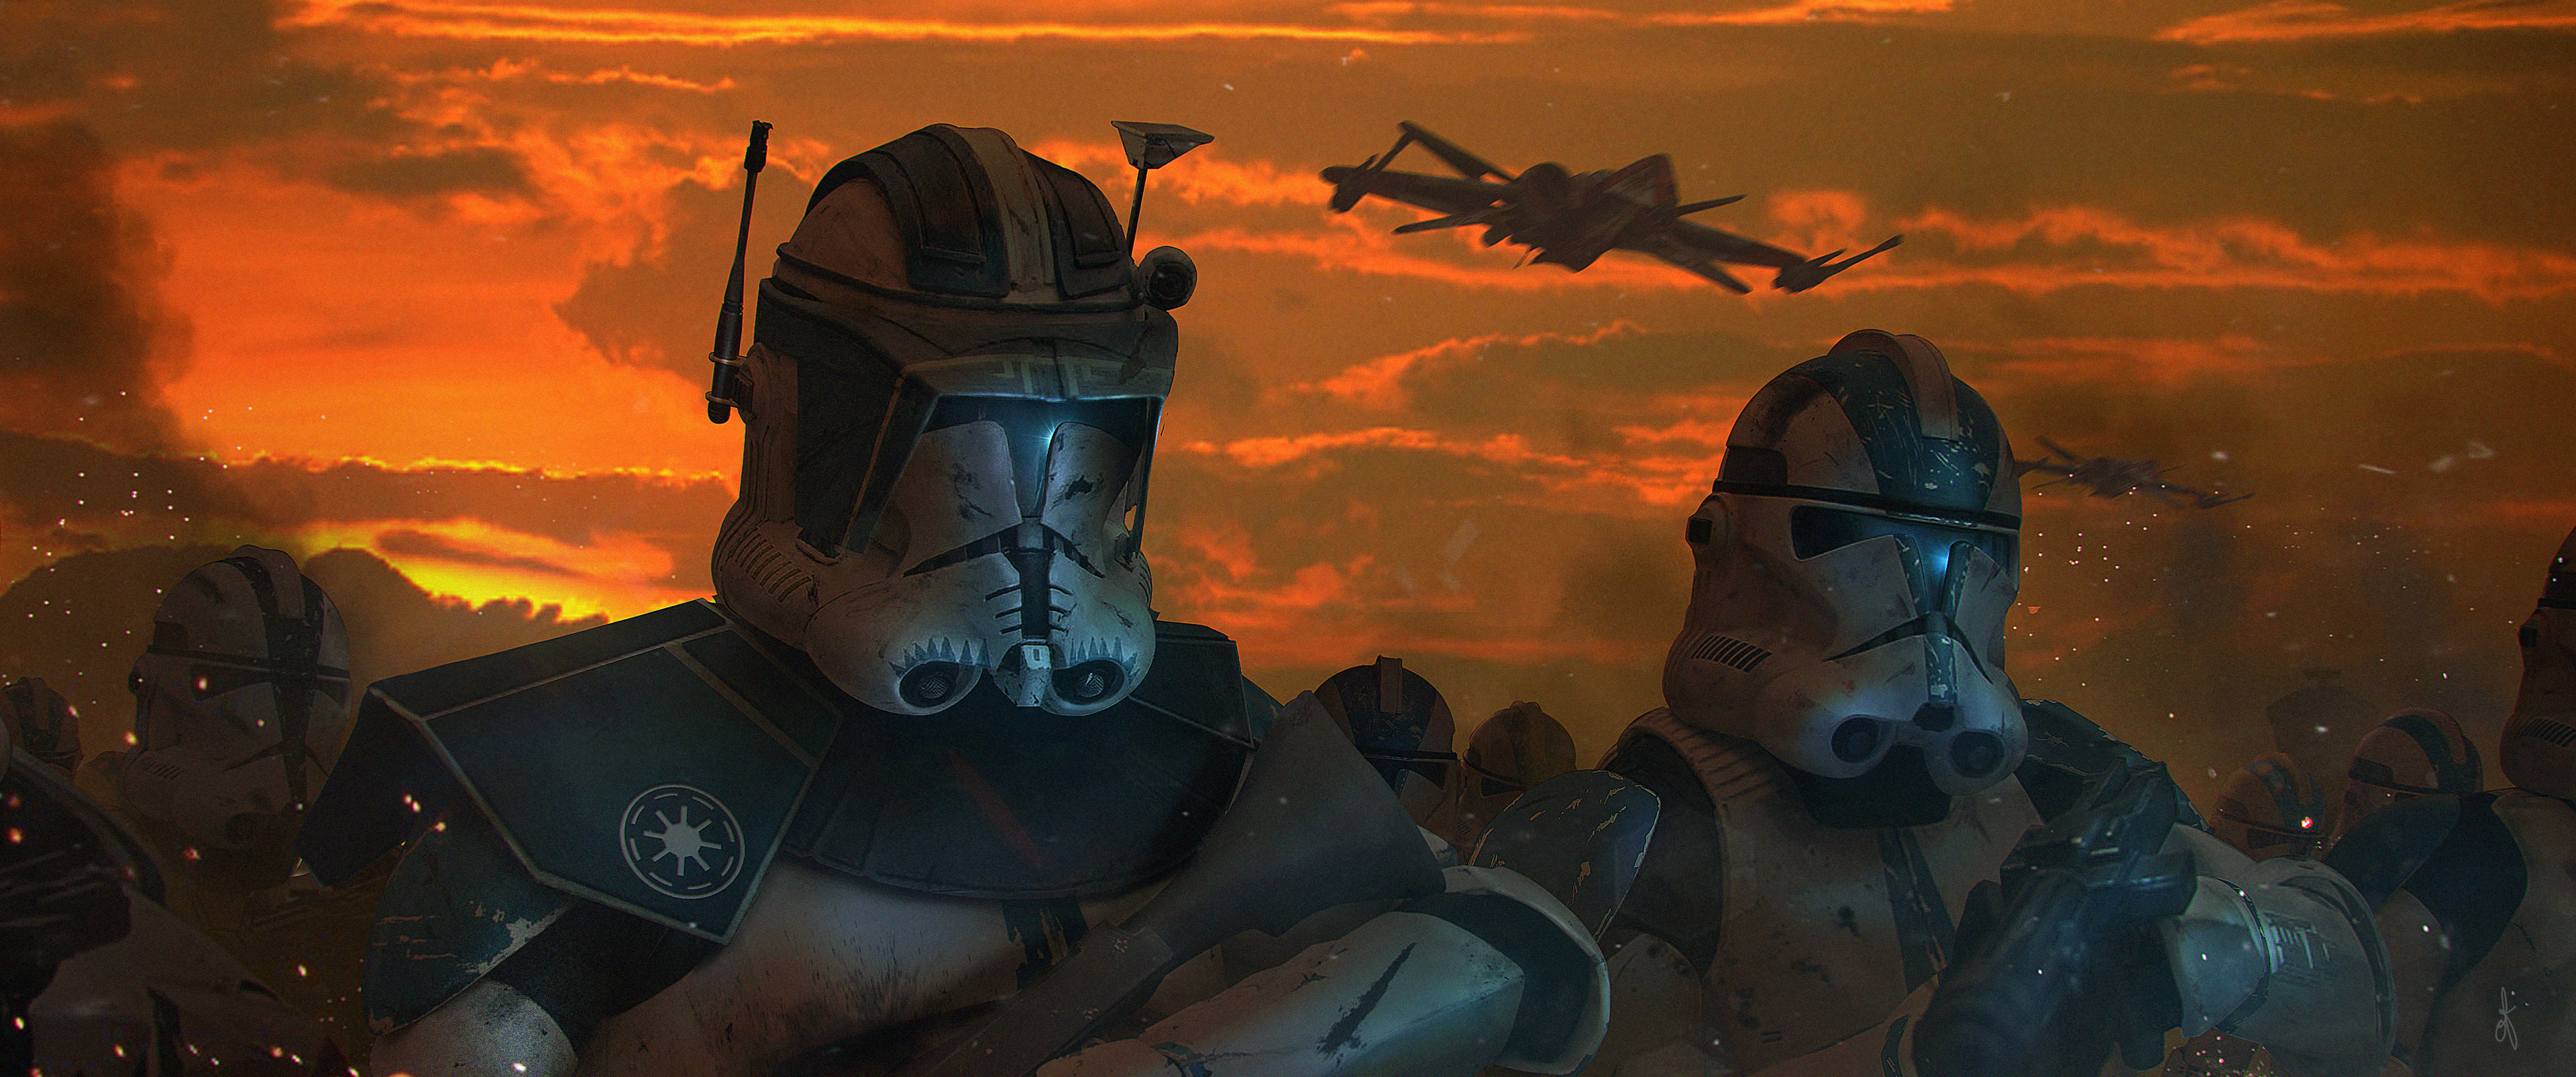 Wallpaper Clone Trooper Star Wars 4K Art 19228